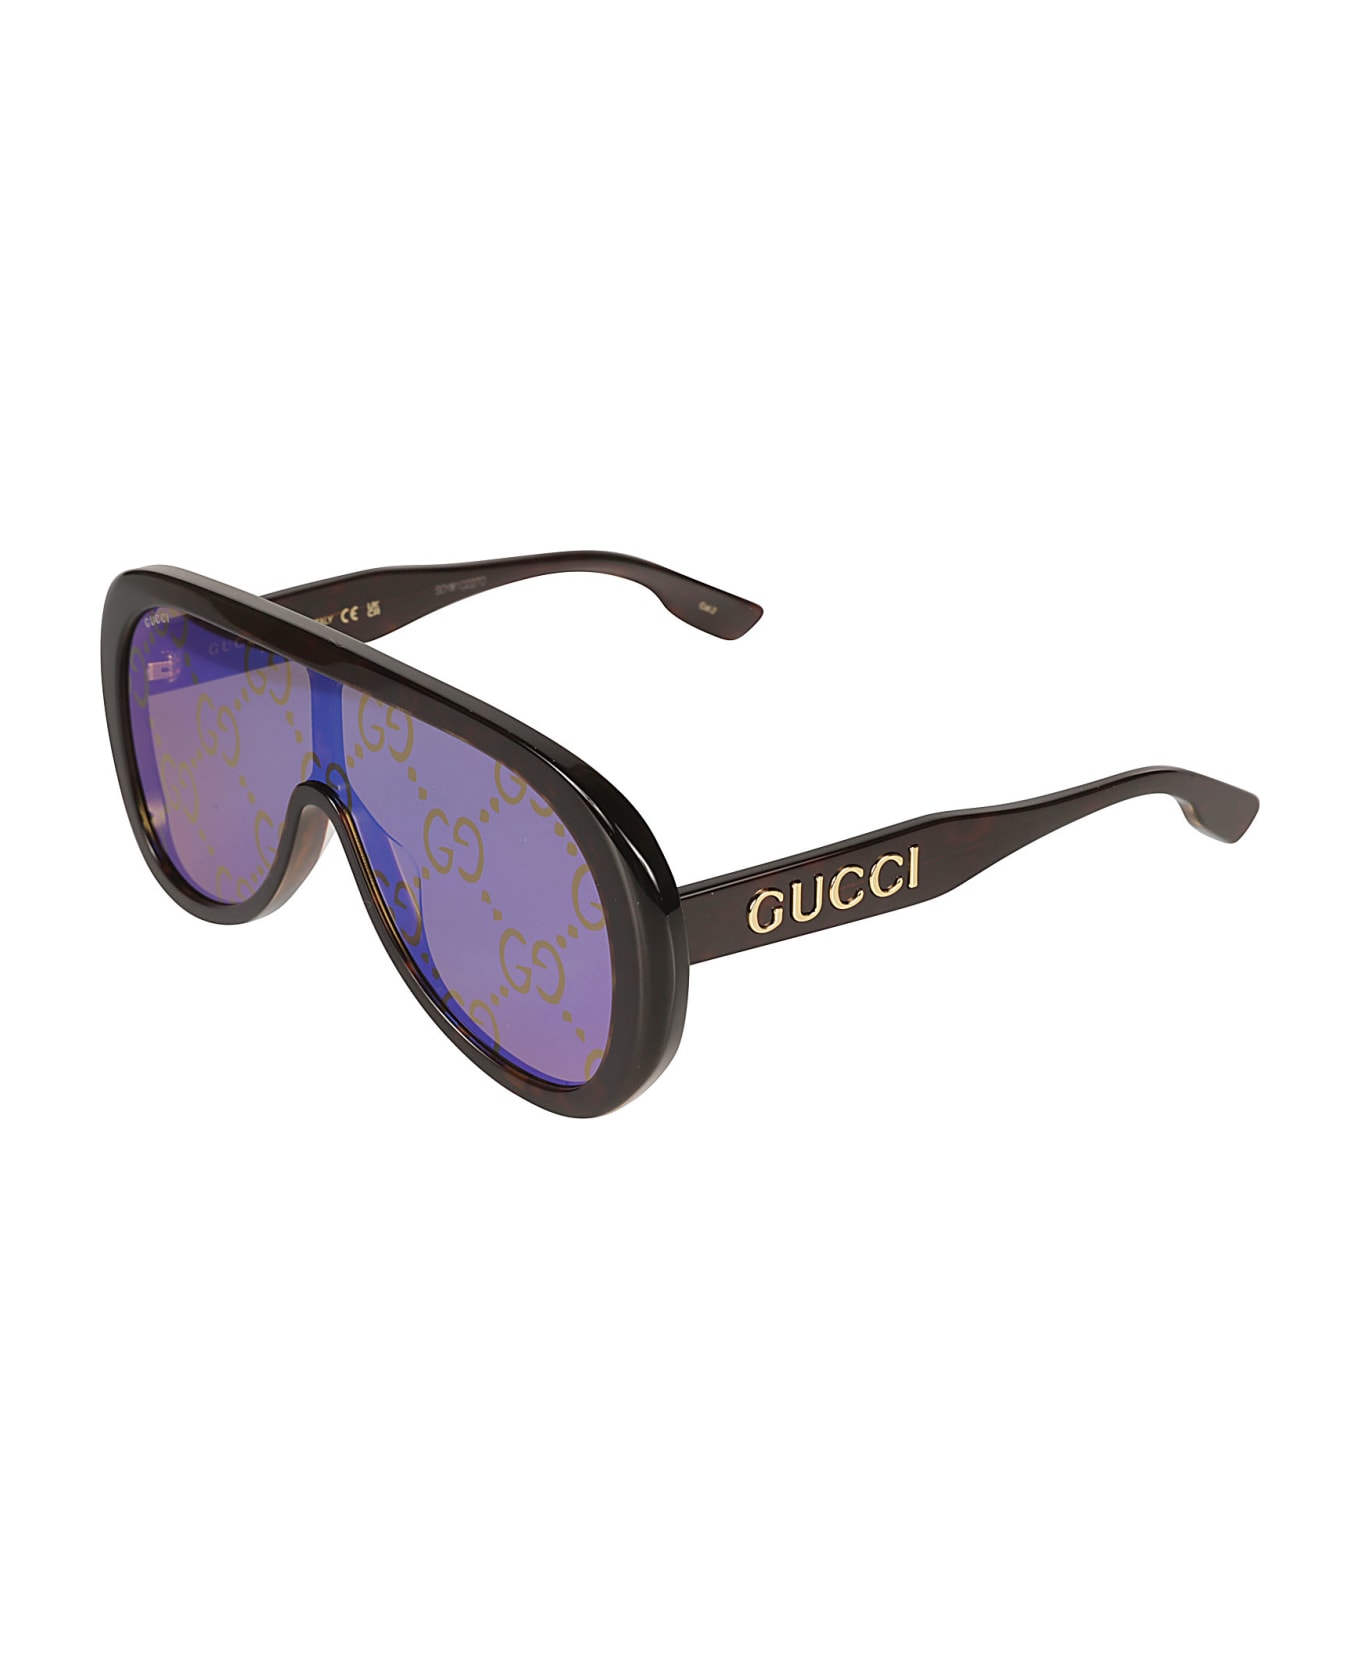 Gucci Eyewear Mask Frame Sunglasses Metallic - Havana/Blue